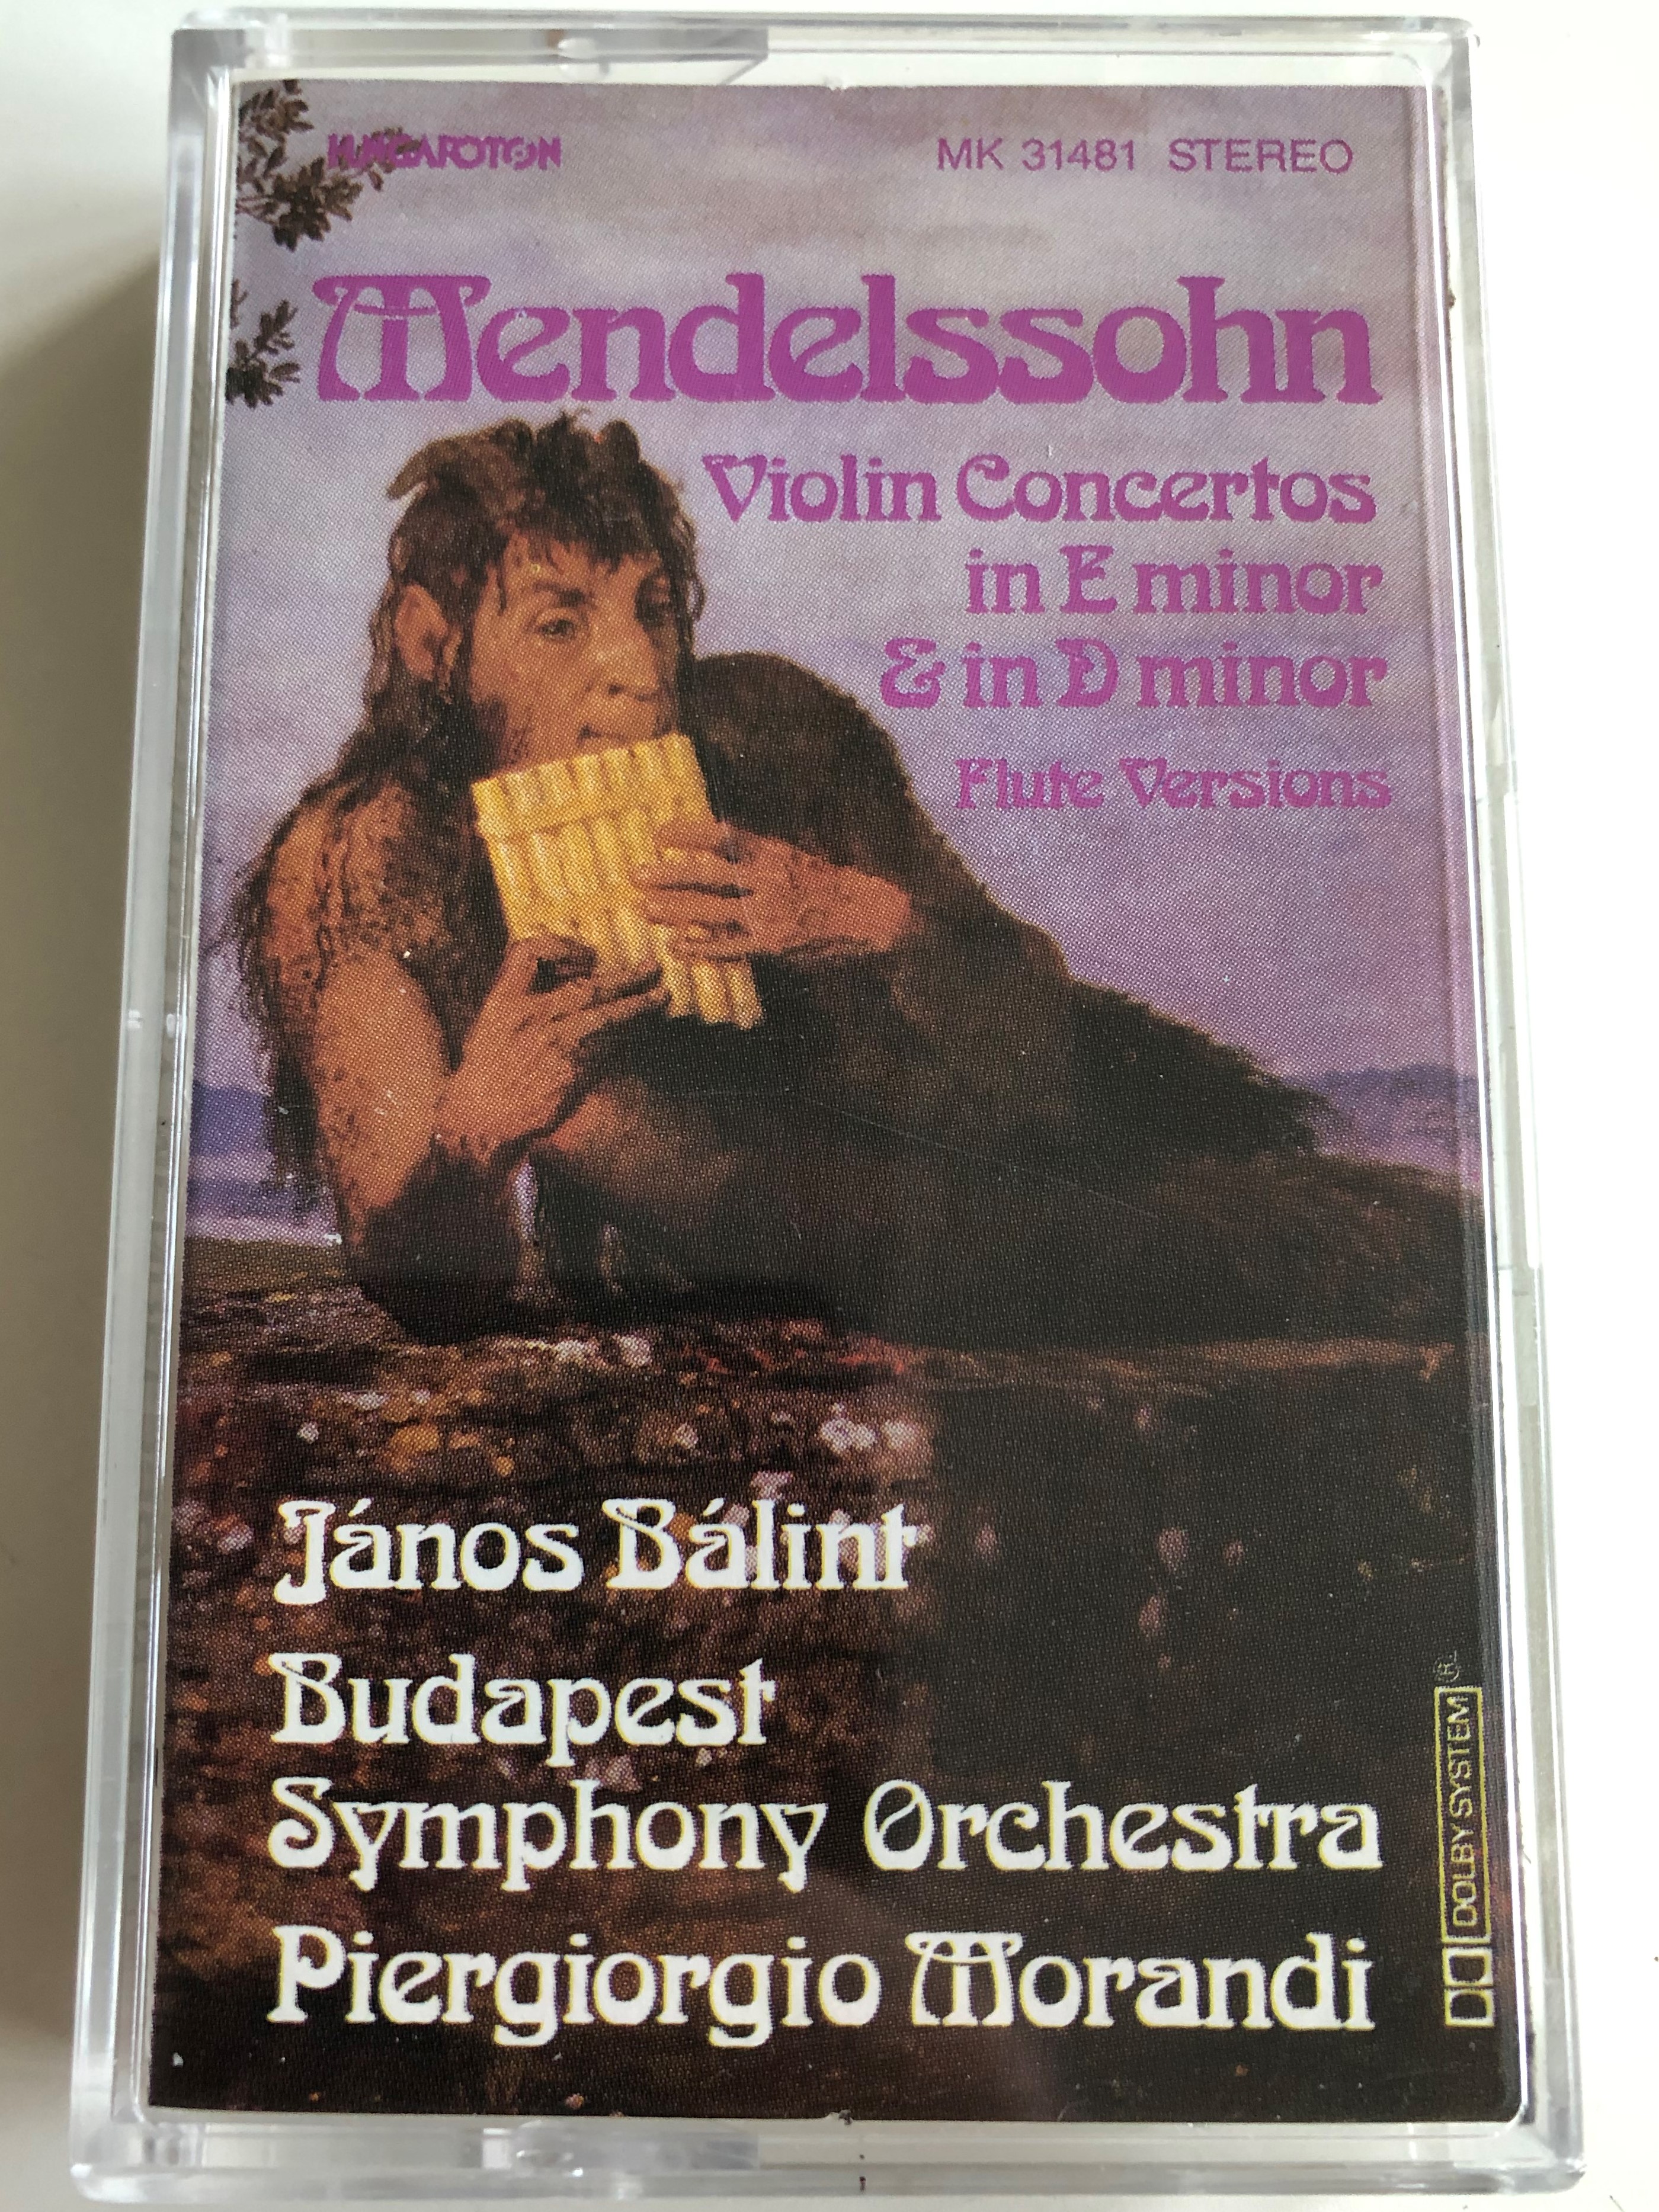 mendelssohn-violin-concertos-in-e-minor-in-d-minor-flute-versions-j-nos-b-lint-budapest-symphony-orchestra-conducted-piergiorgio-morandi-hungaroton-cassette-stereo-mk-31481-1-.jpg